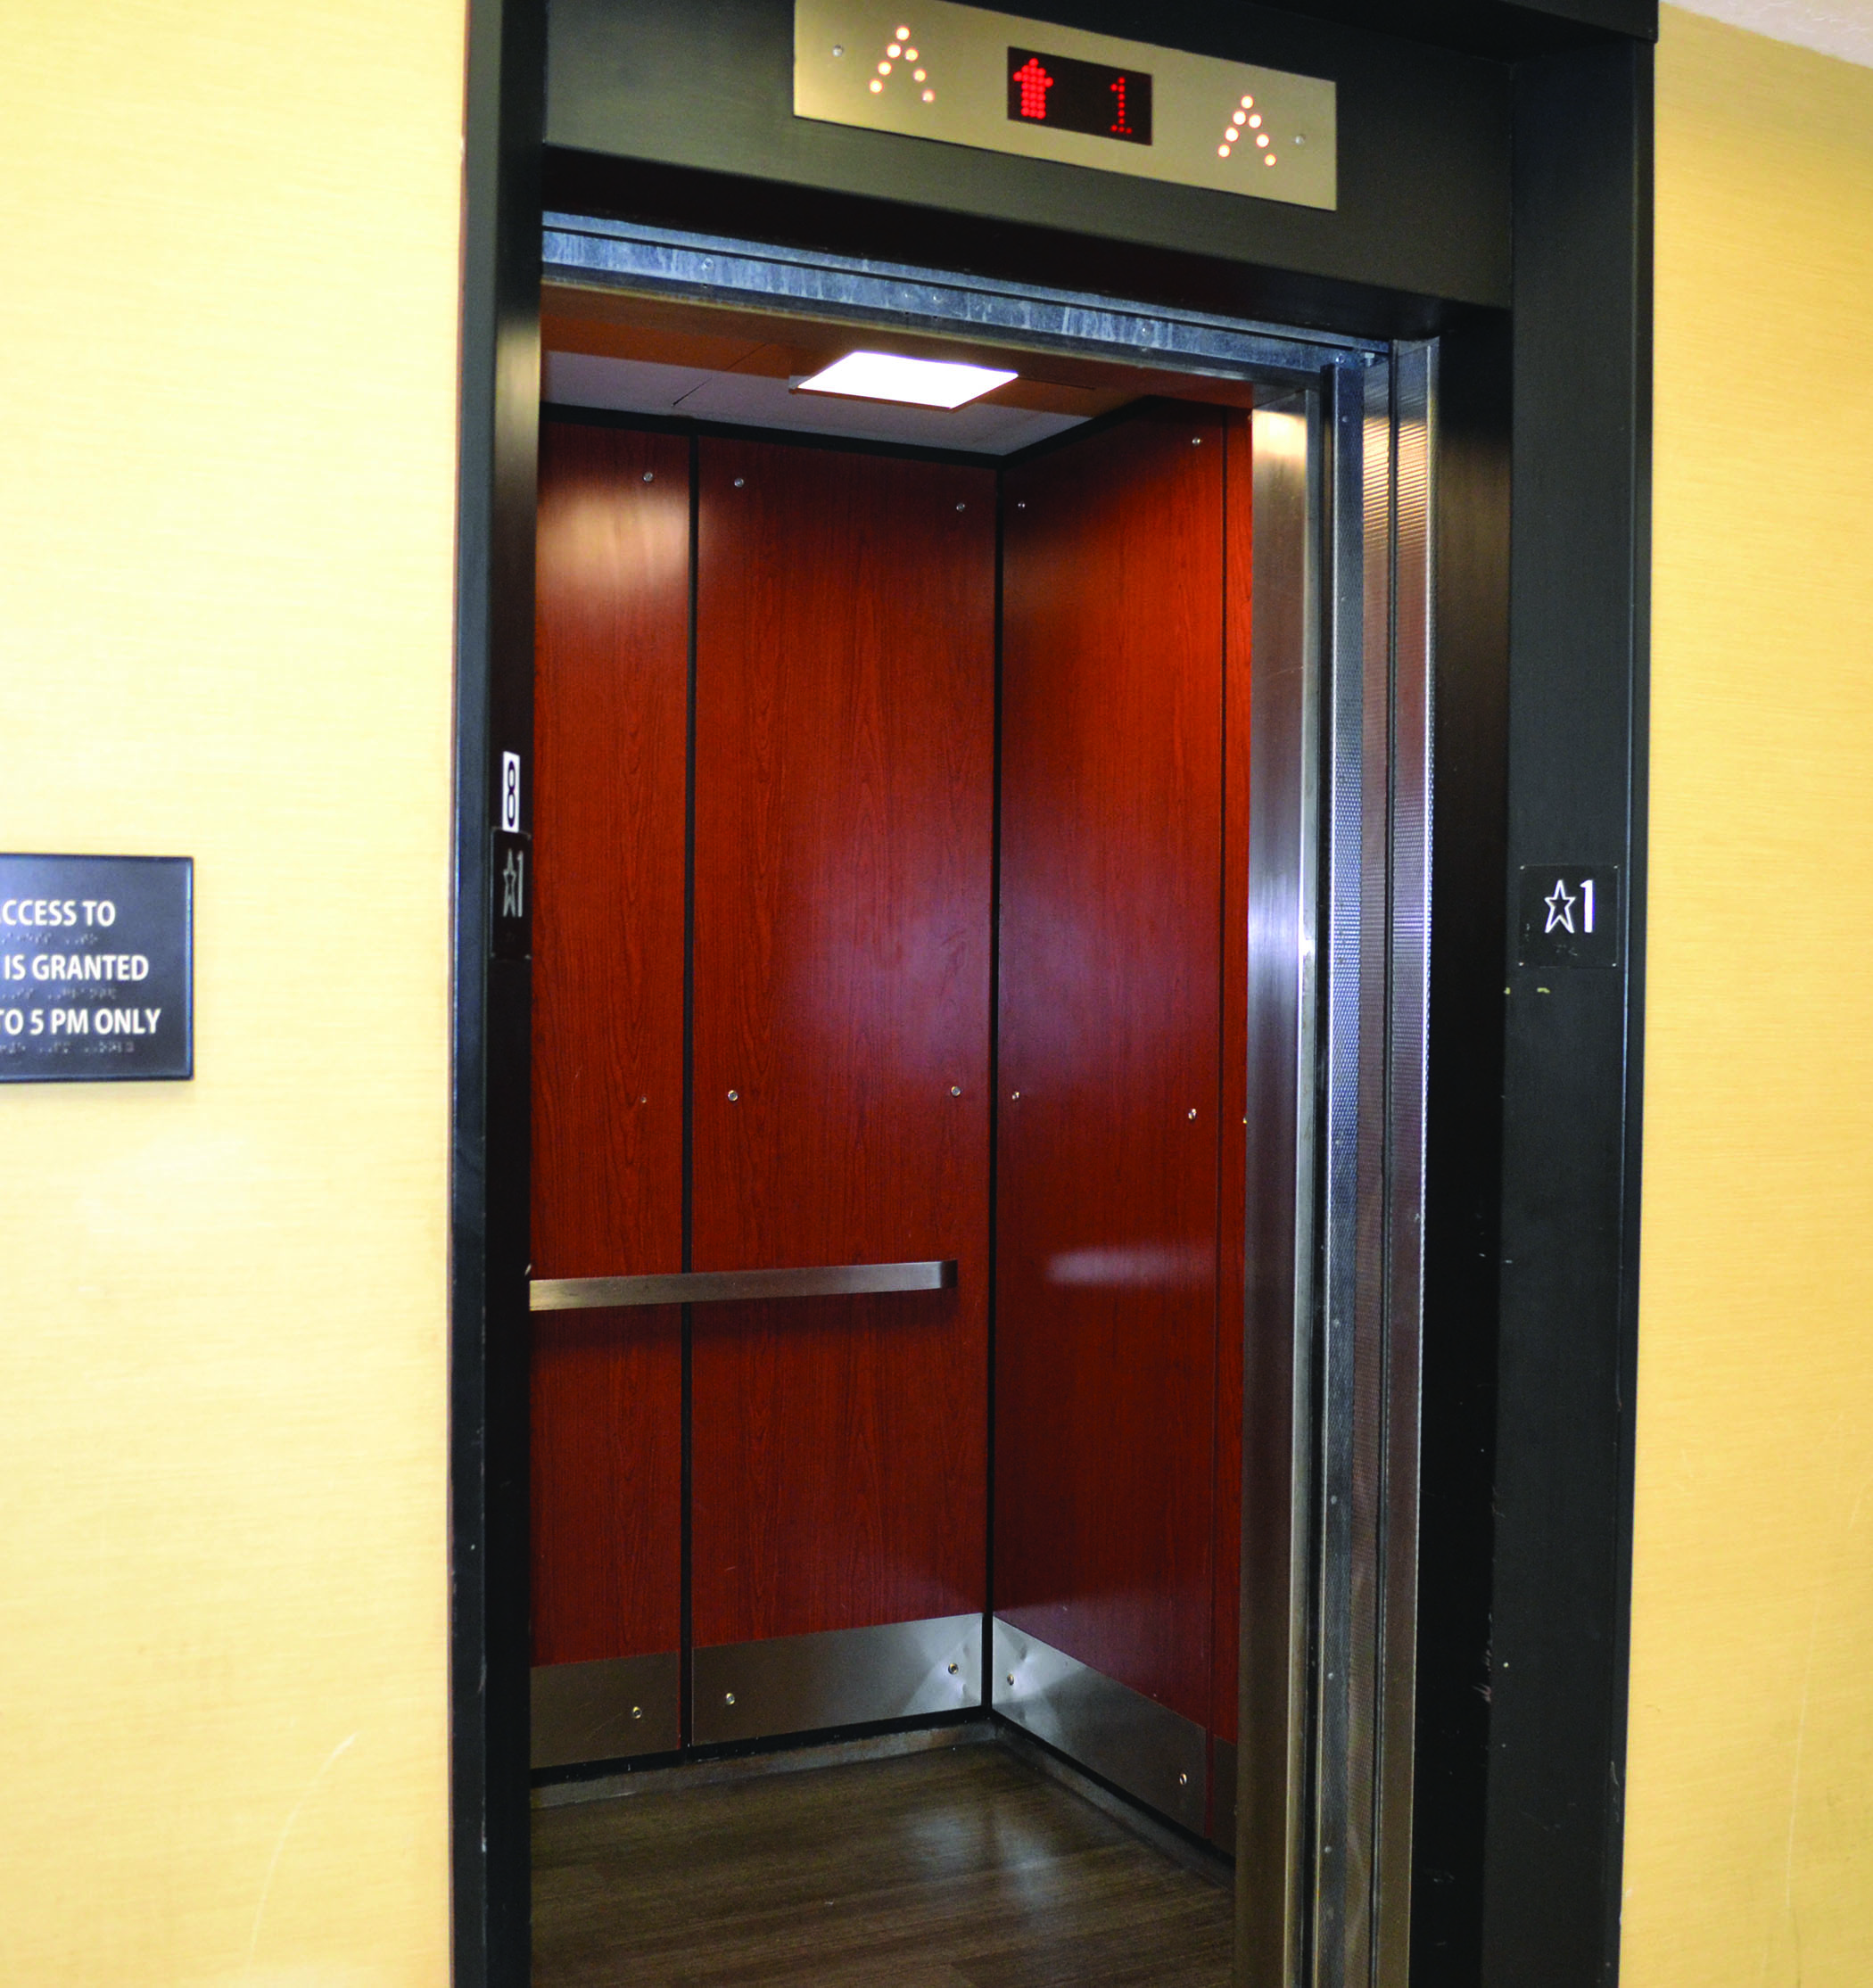 Problems Arise with Shepler Elevators